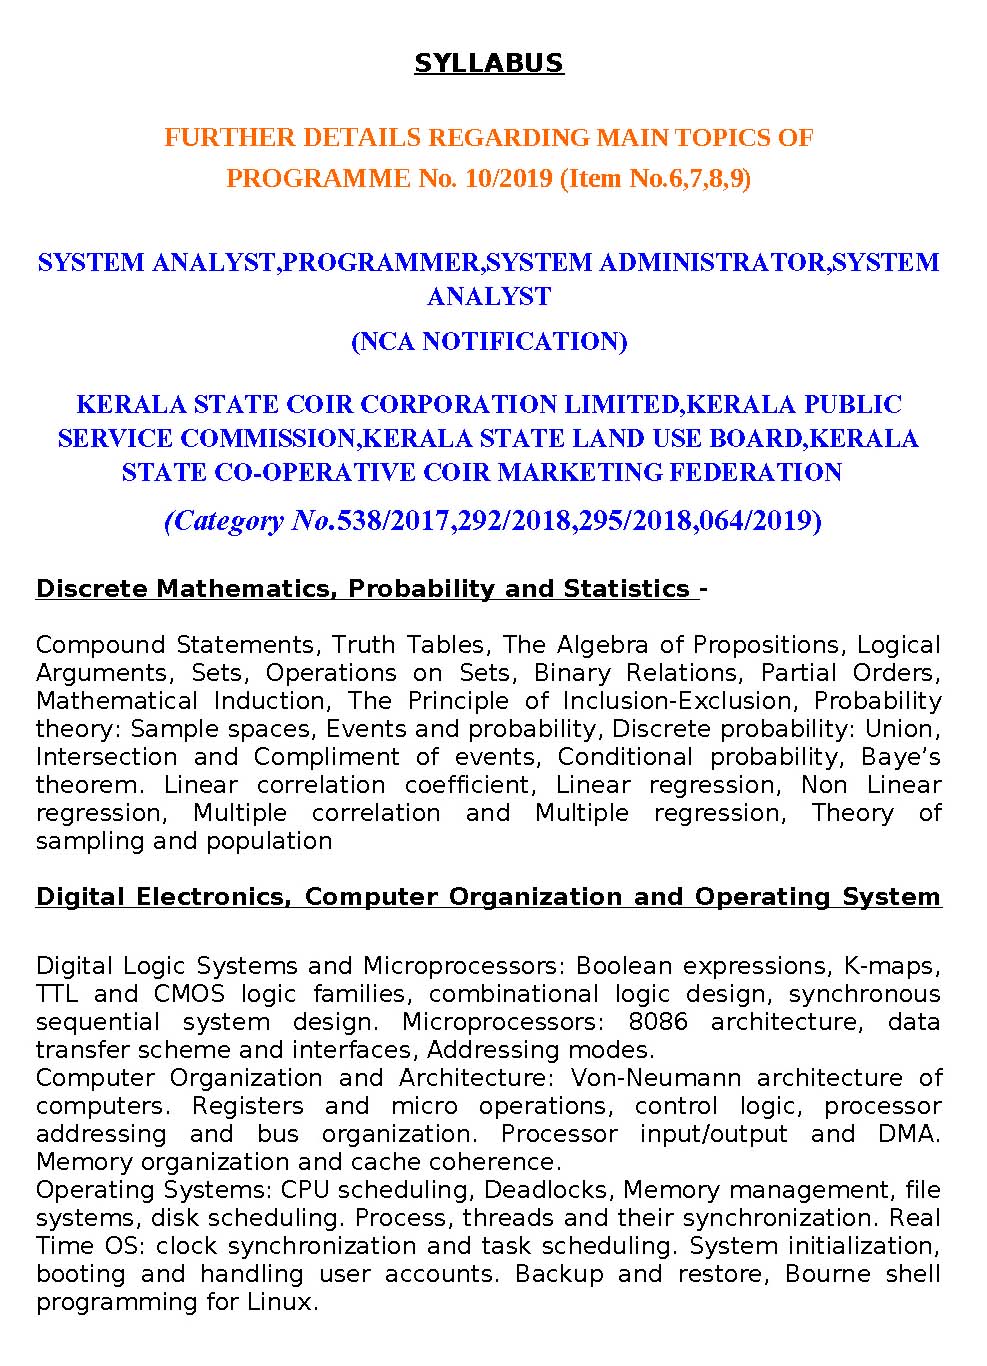 Kerala PSC Syllabus 2019 System Analyst - Notification Image 1